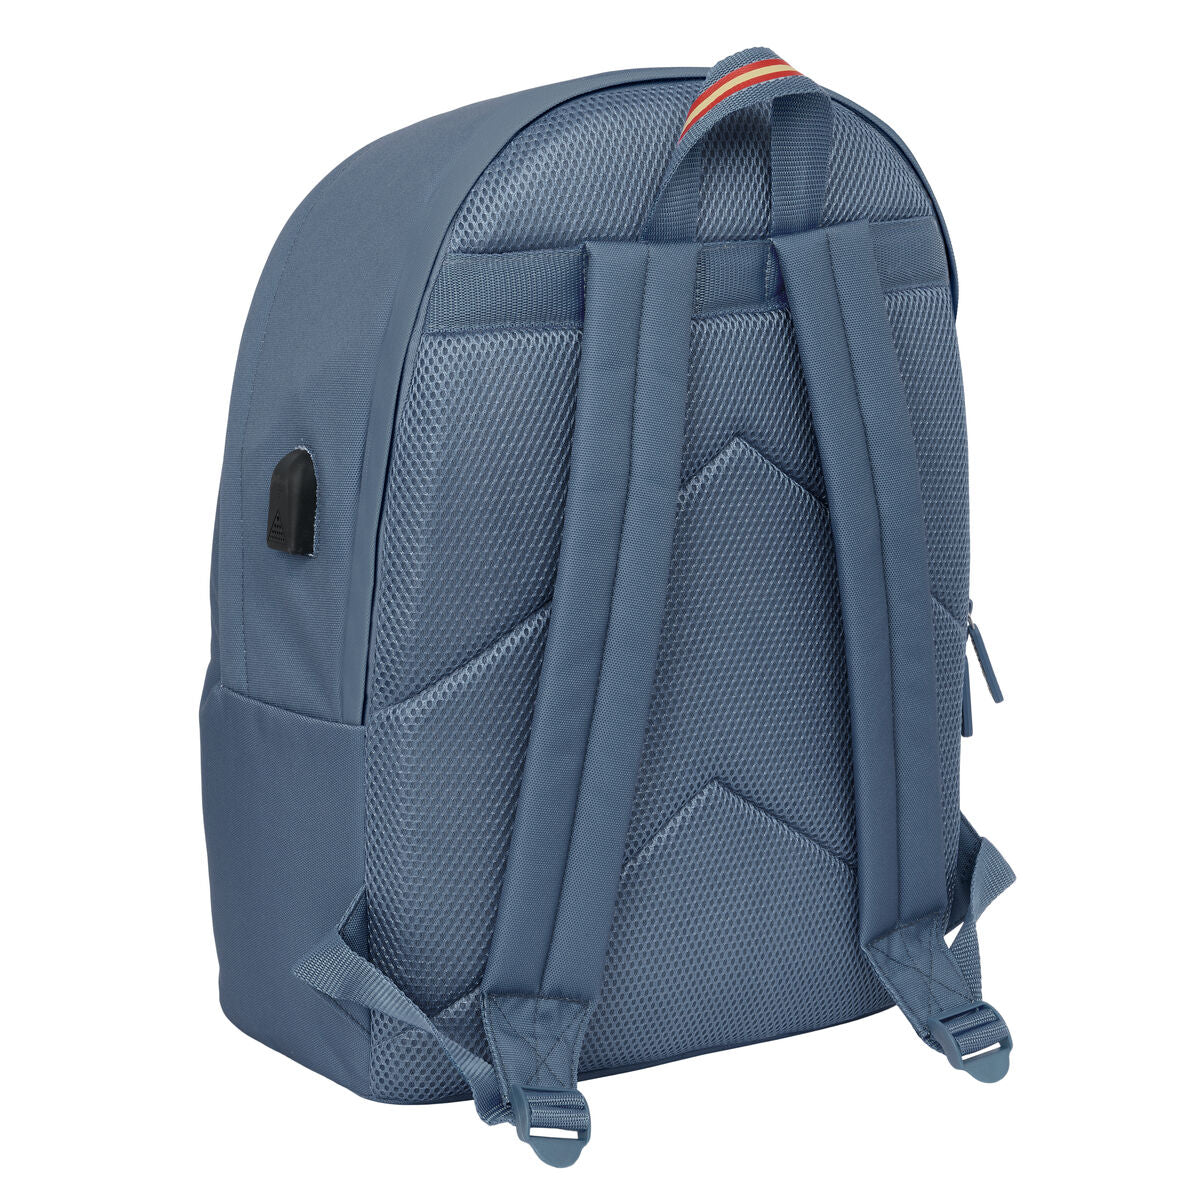 Laptop Backpack El Ganso Basics Blue 31 x 44 x 18 cm